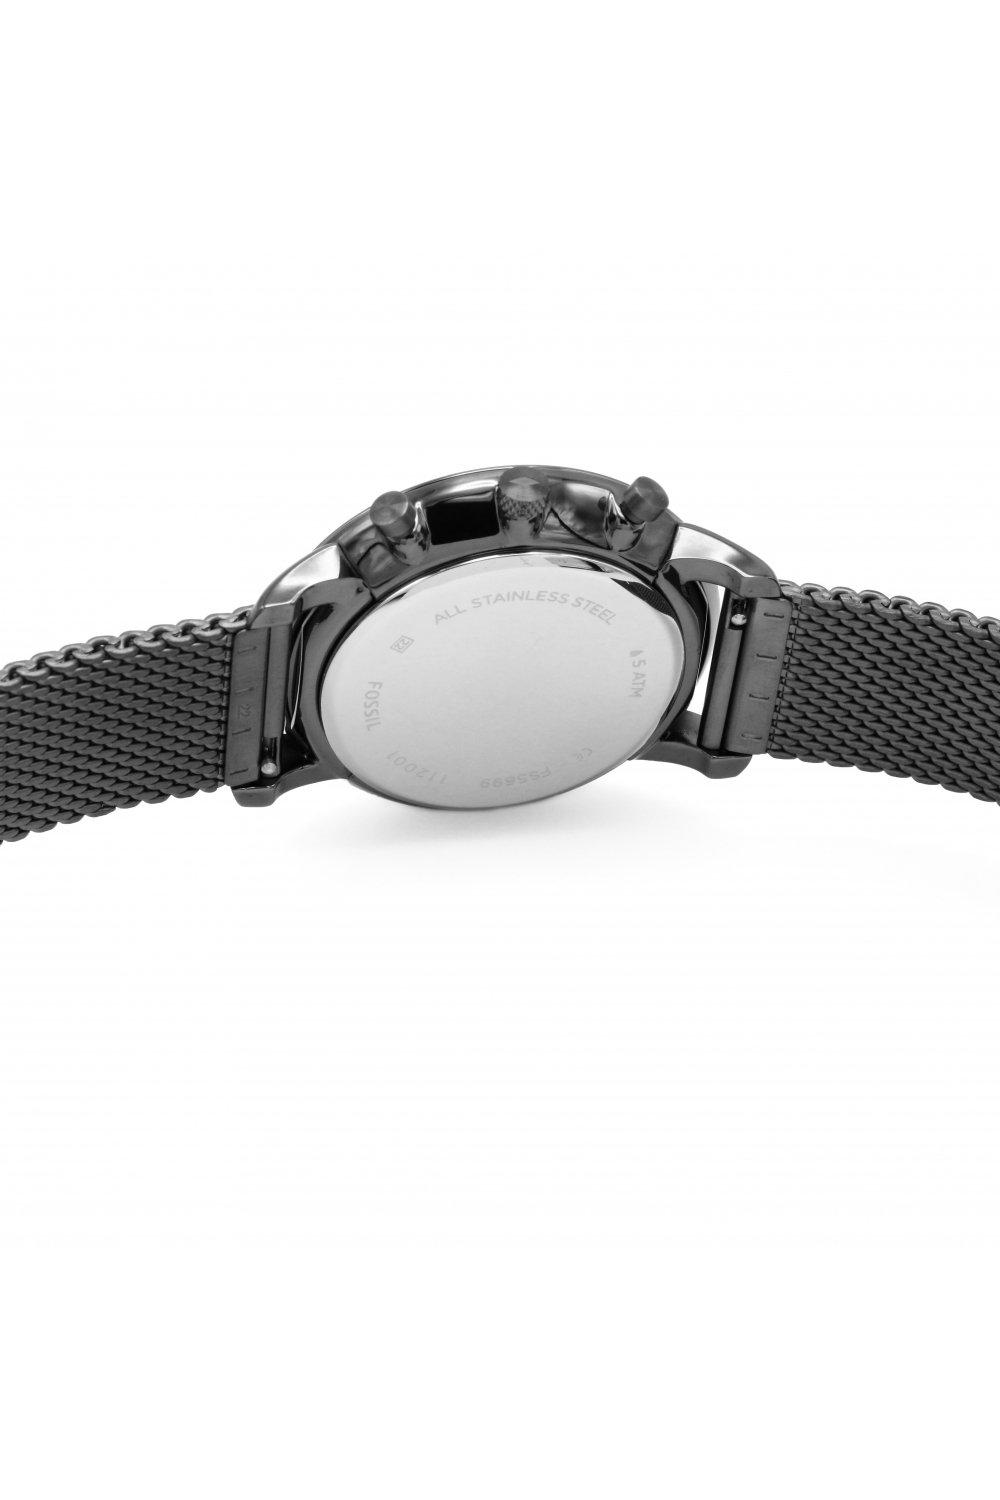 Watches | Neutra Chrono Stainless Fashion Analogue Quartz | Fossil Fs5699 - Steel Watch